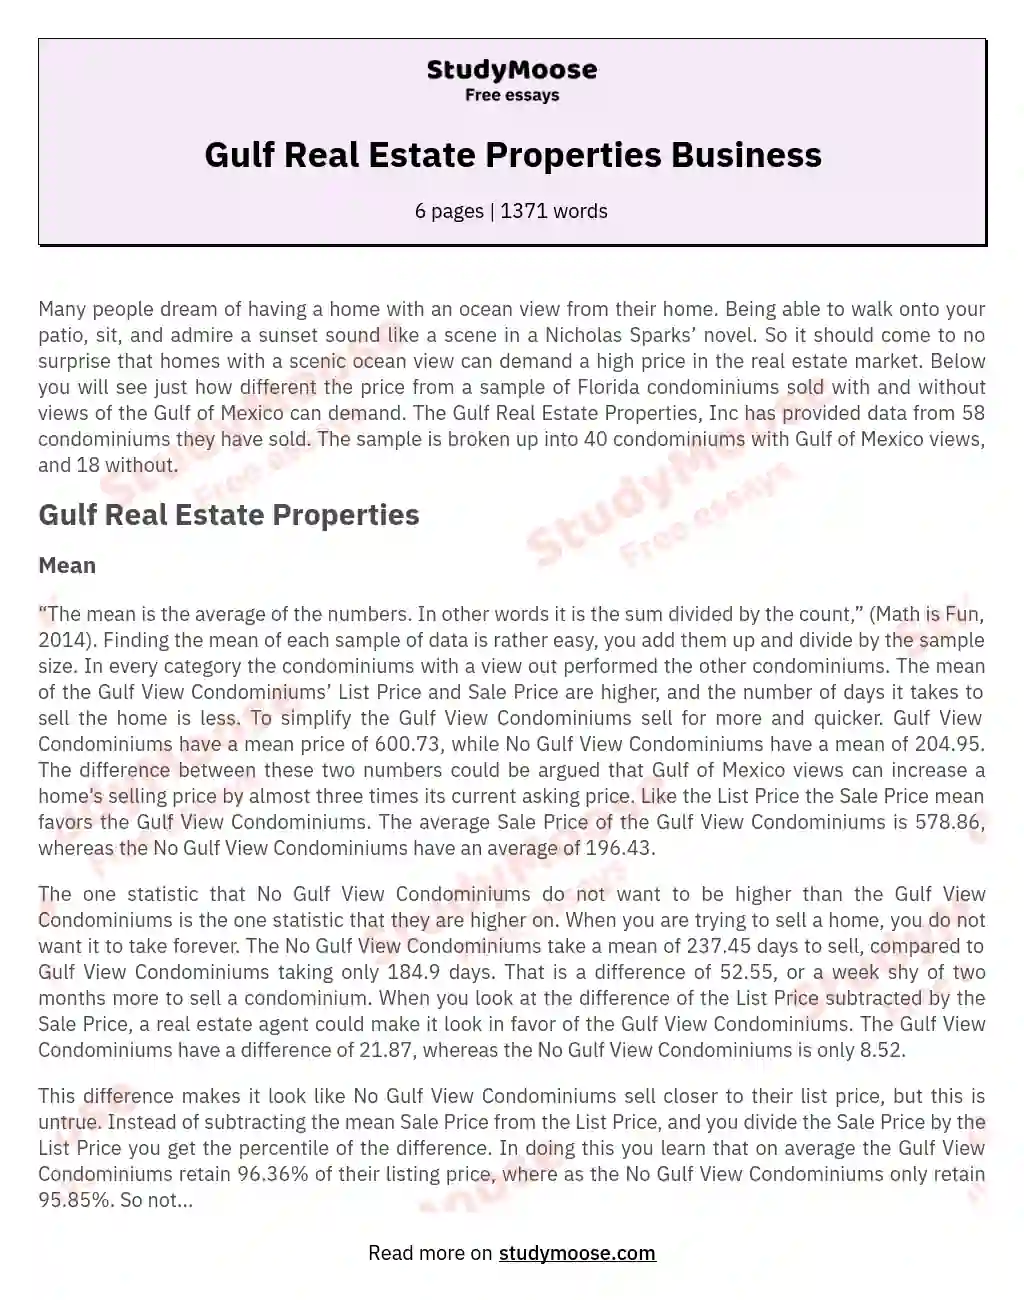 Gulf Real Estate Properties Business essay